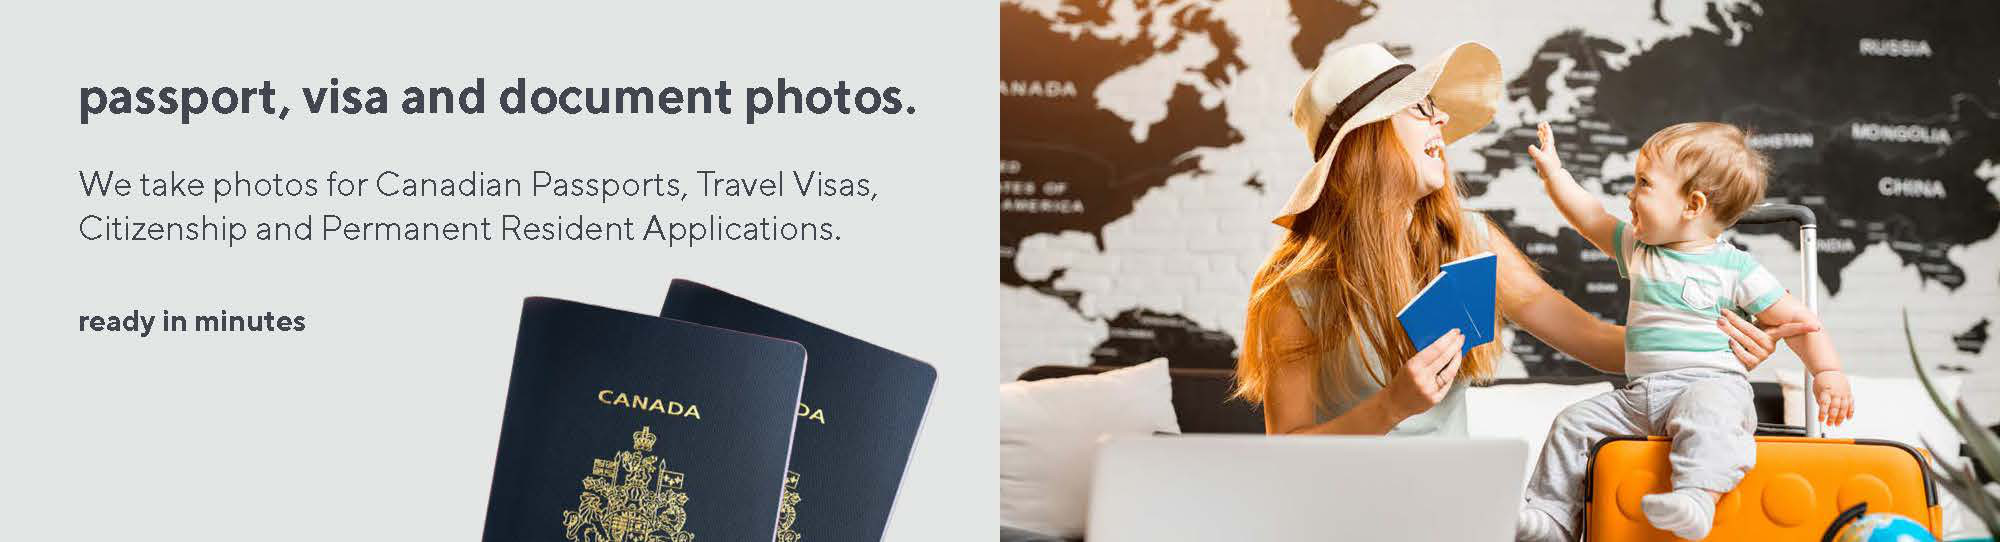 Passport, visa and document photos.